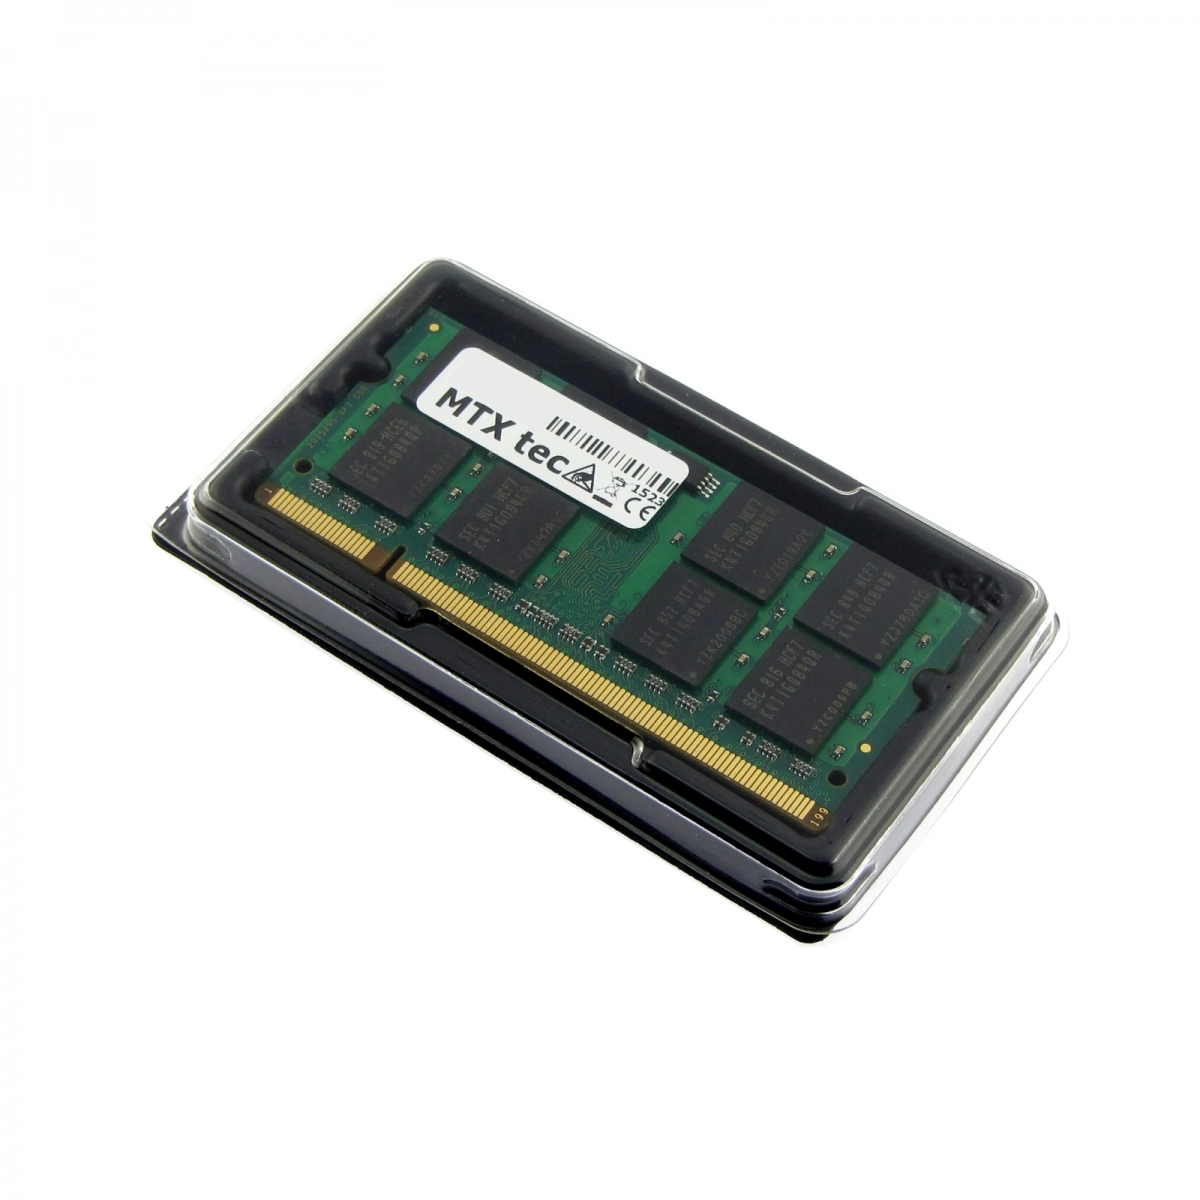 MTXtec Arbeitsspeicher 2 GB RAM für LENOVO ThinkPad R61 (8919)